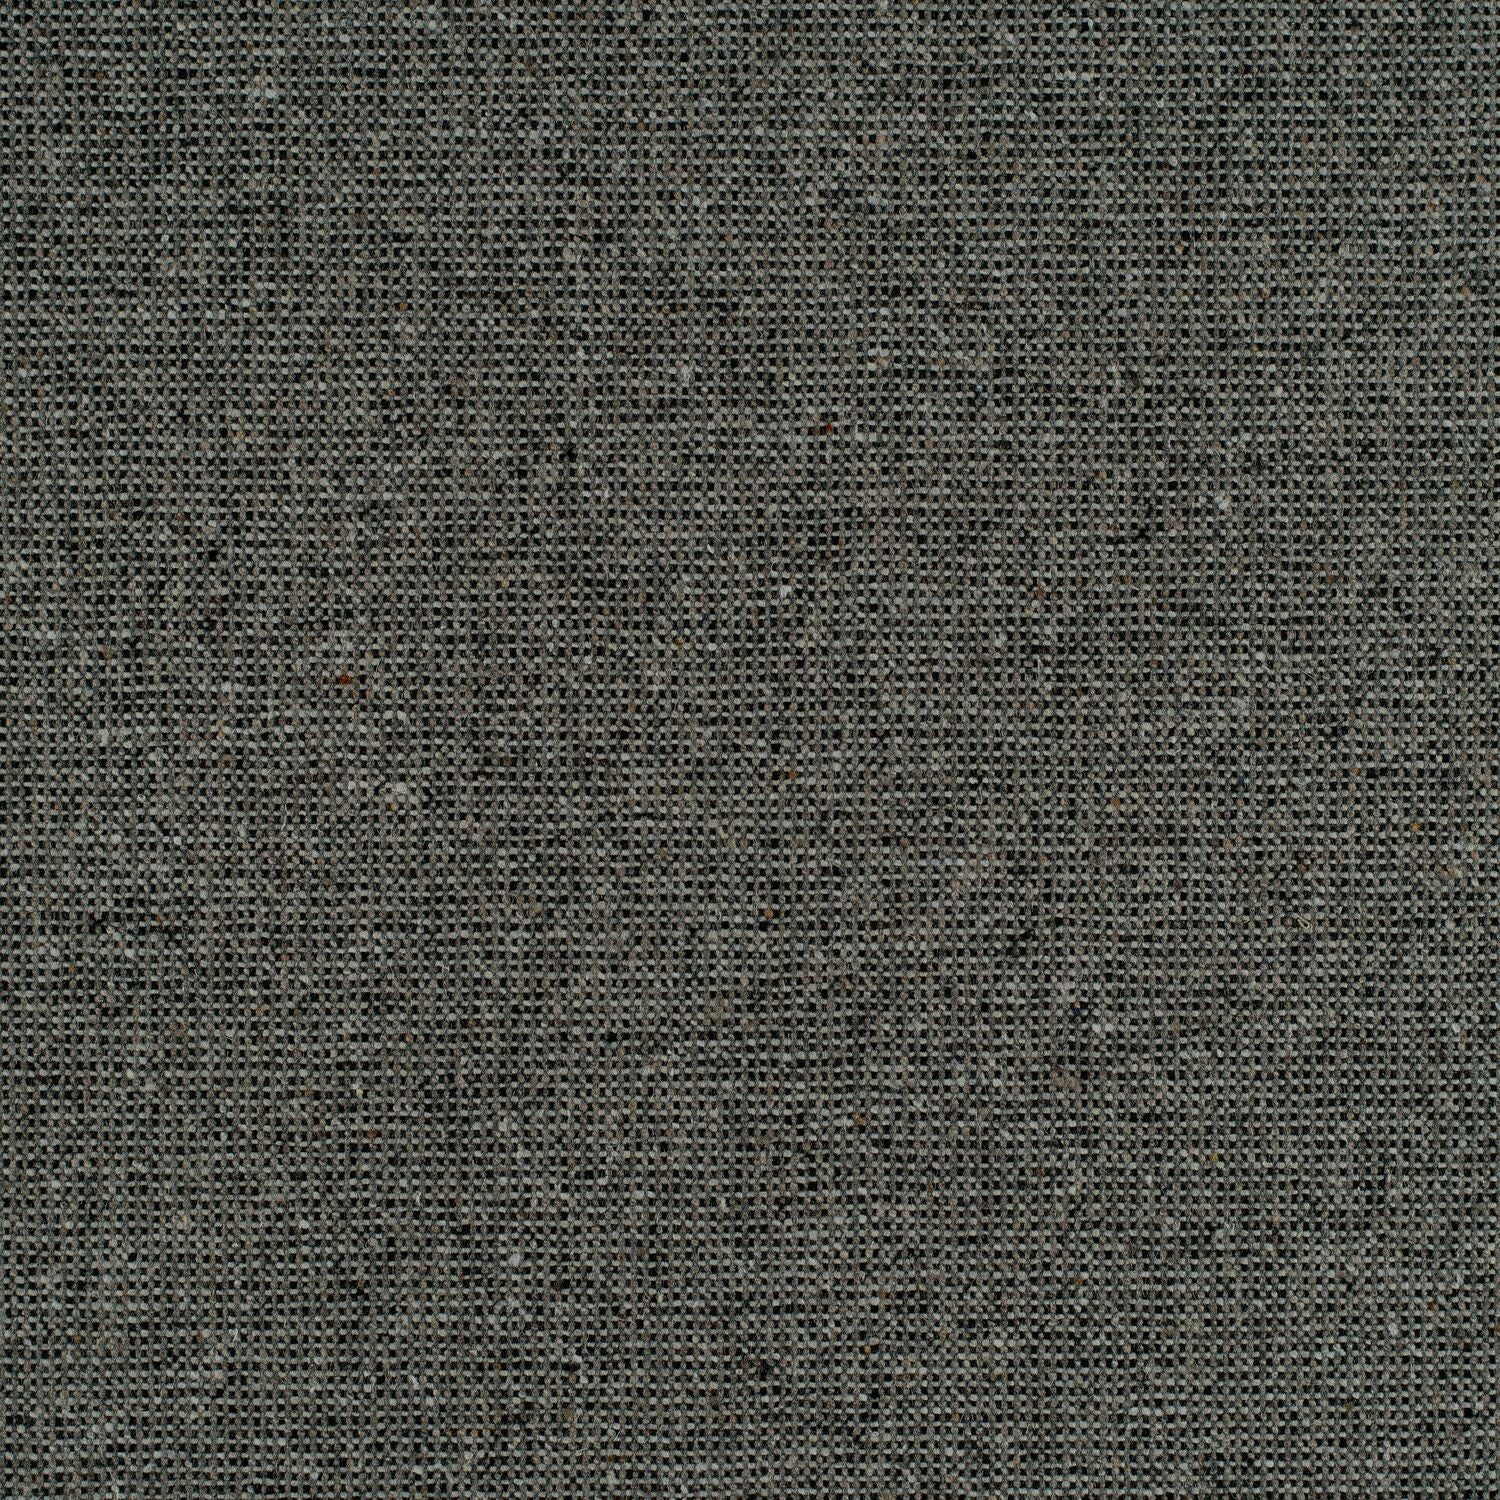 Wool Fleck - Packstone - 4099 - 02